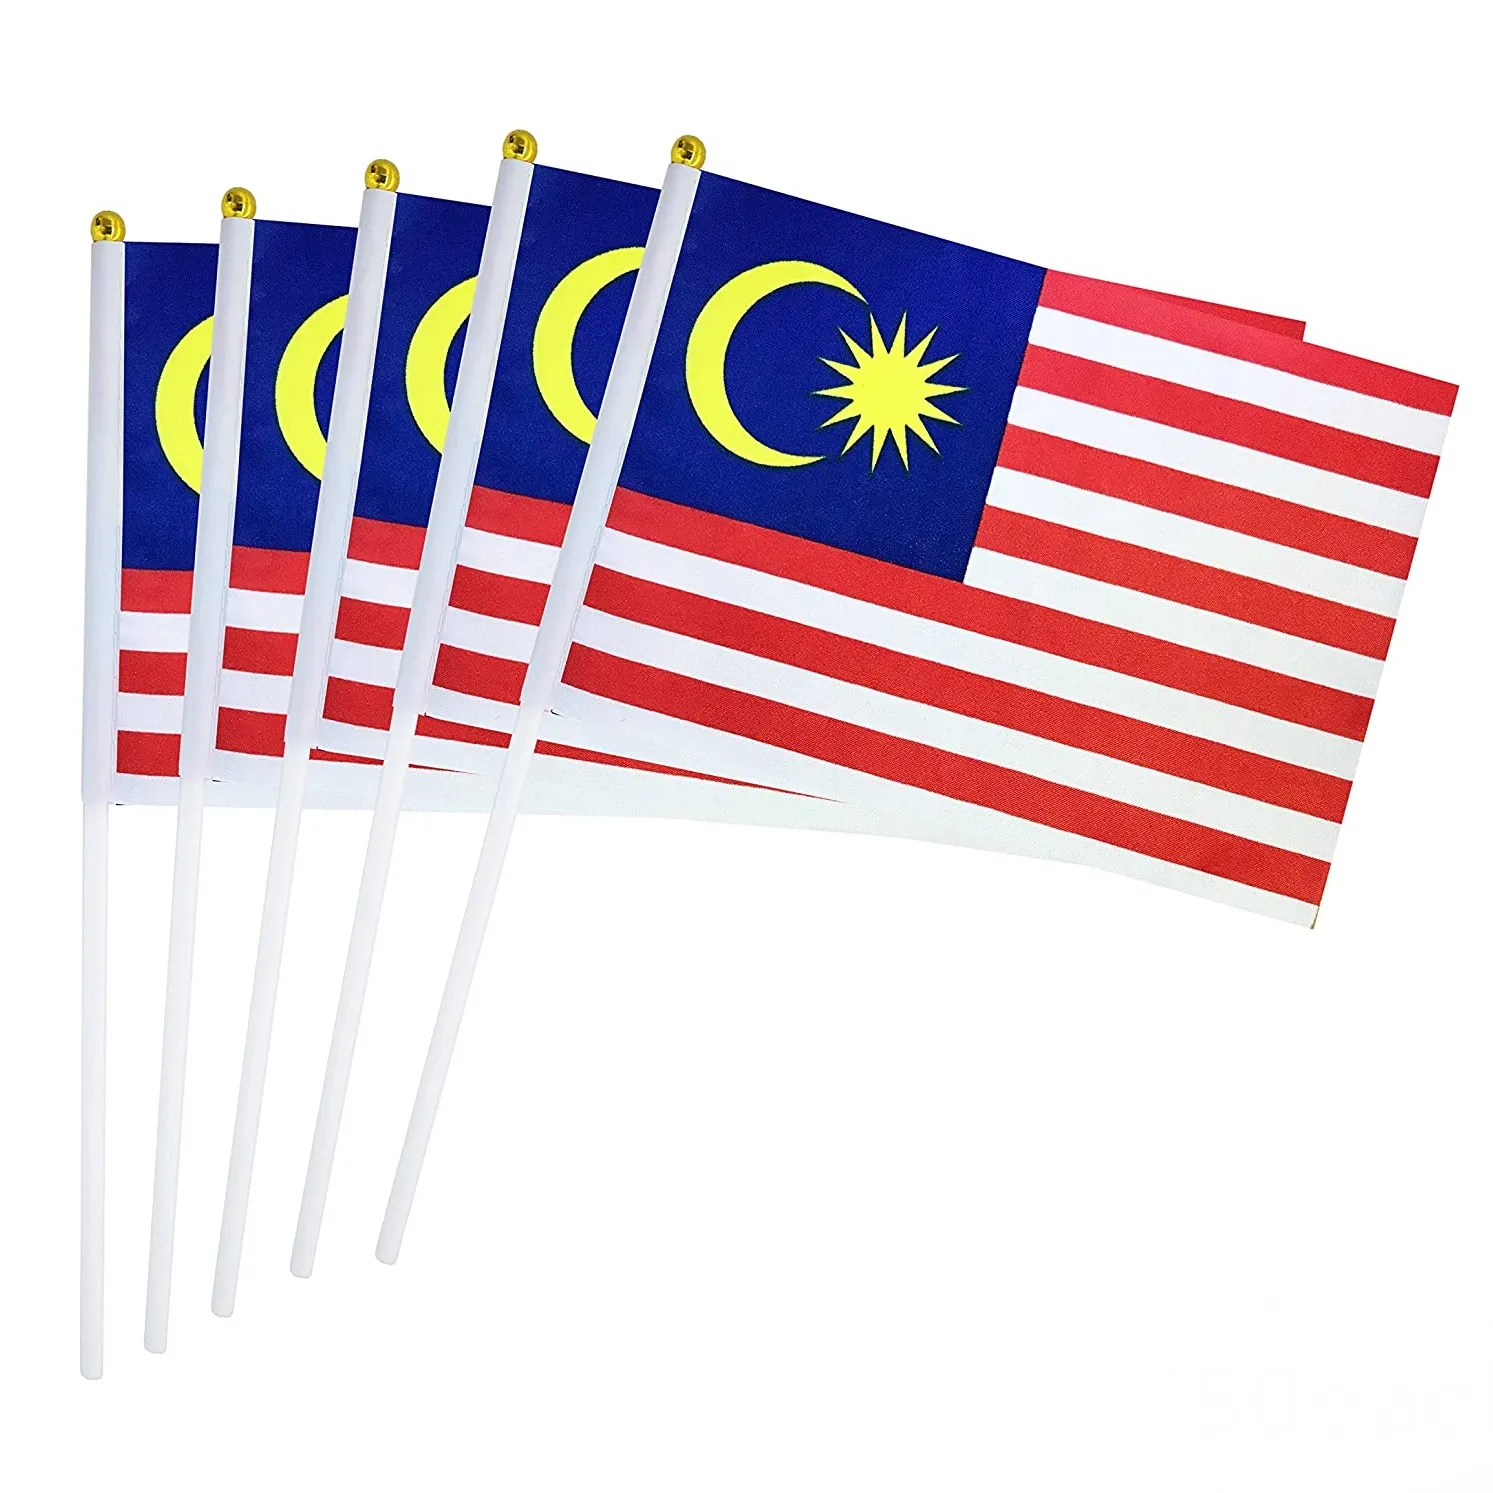 Gratis Verzending Maleisië Vlag China Kantoor Inkoopagent Fabriek Kwaliteit Controleren Order Follow Hand Zwaaien Stick Maleisische Hand Vlaggen